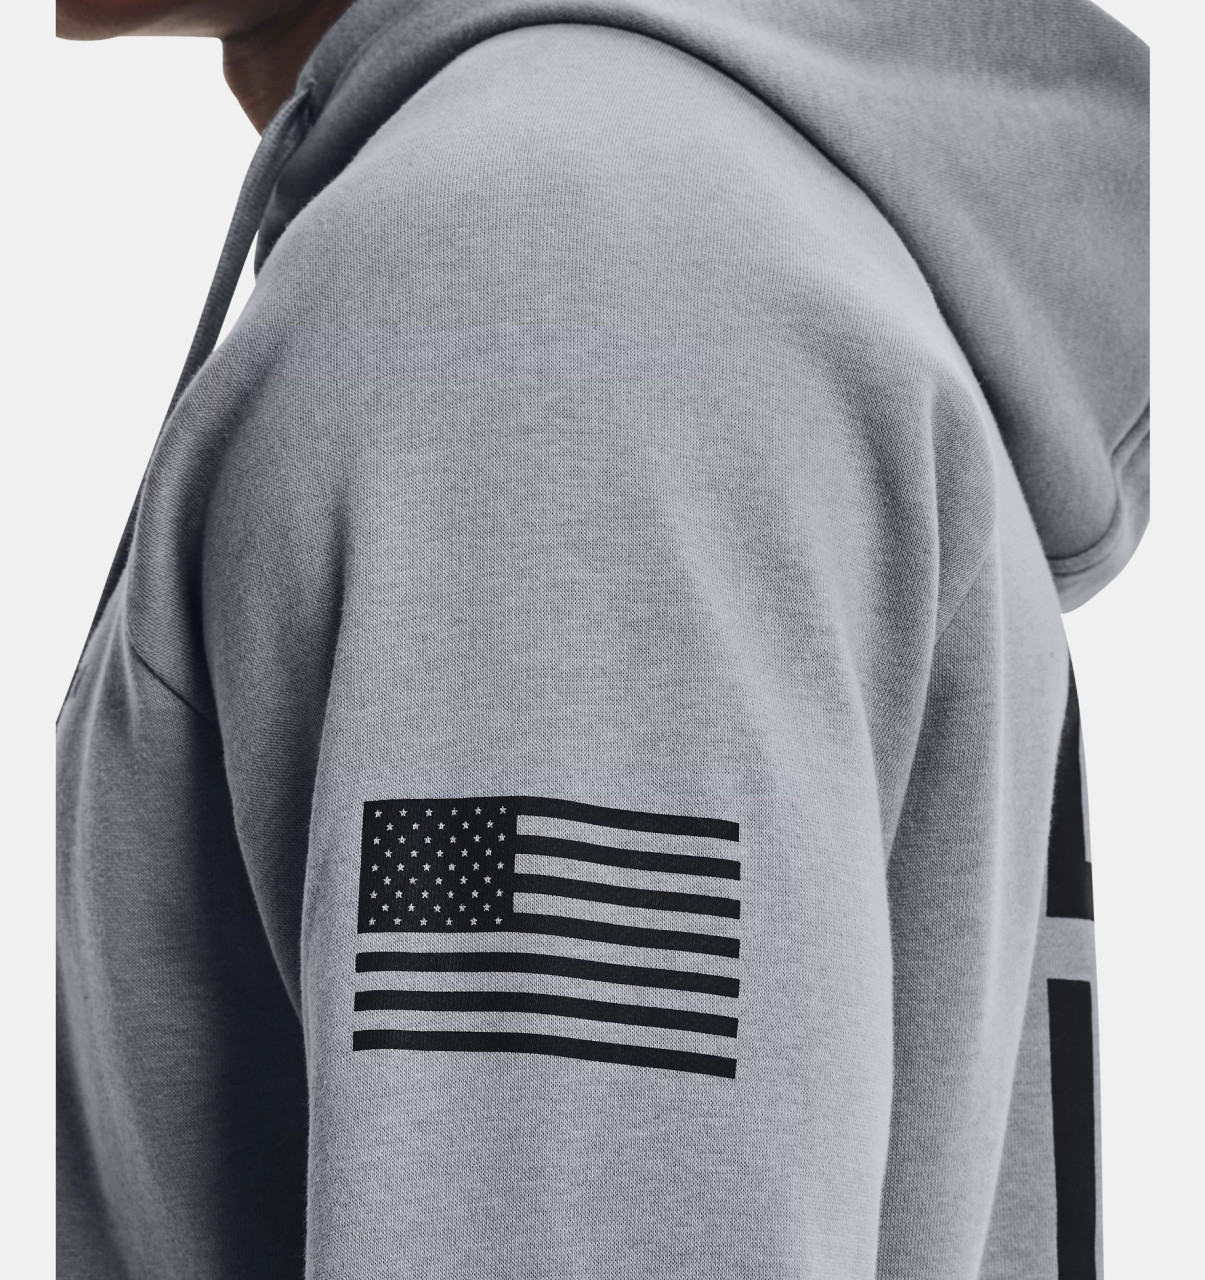 Under Armour Men's New Freedom Flag Hoodie Sweatshirt - 1370806